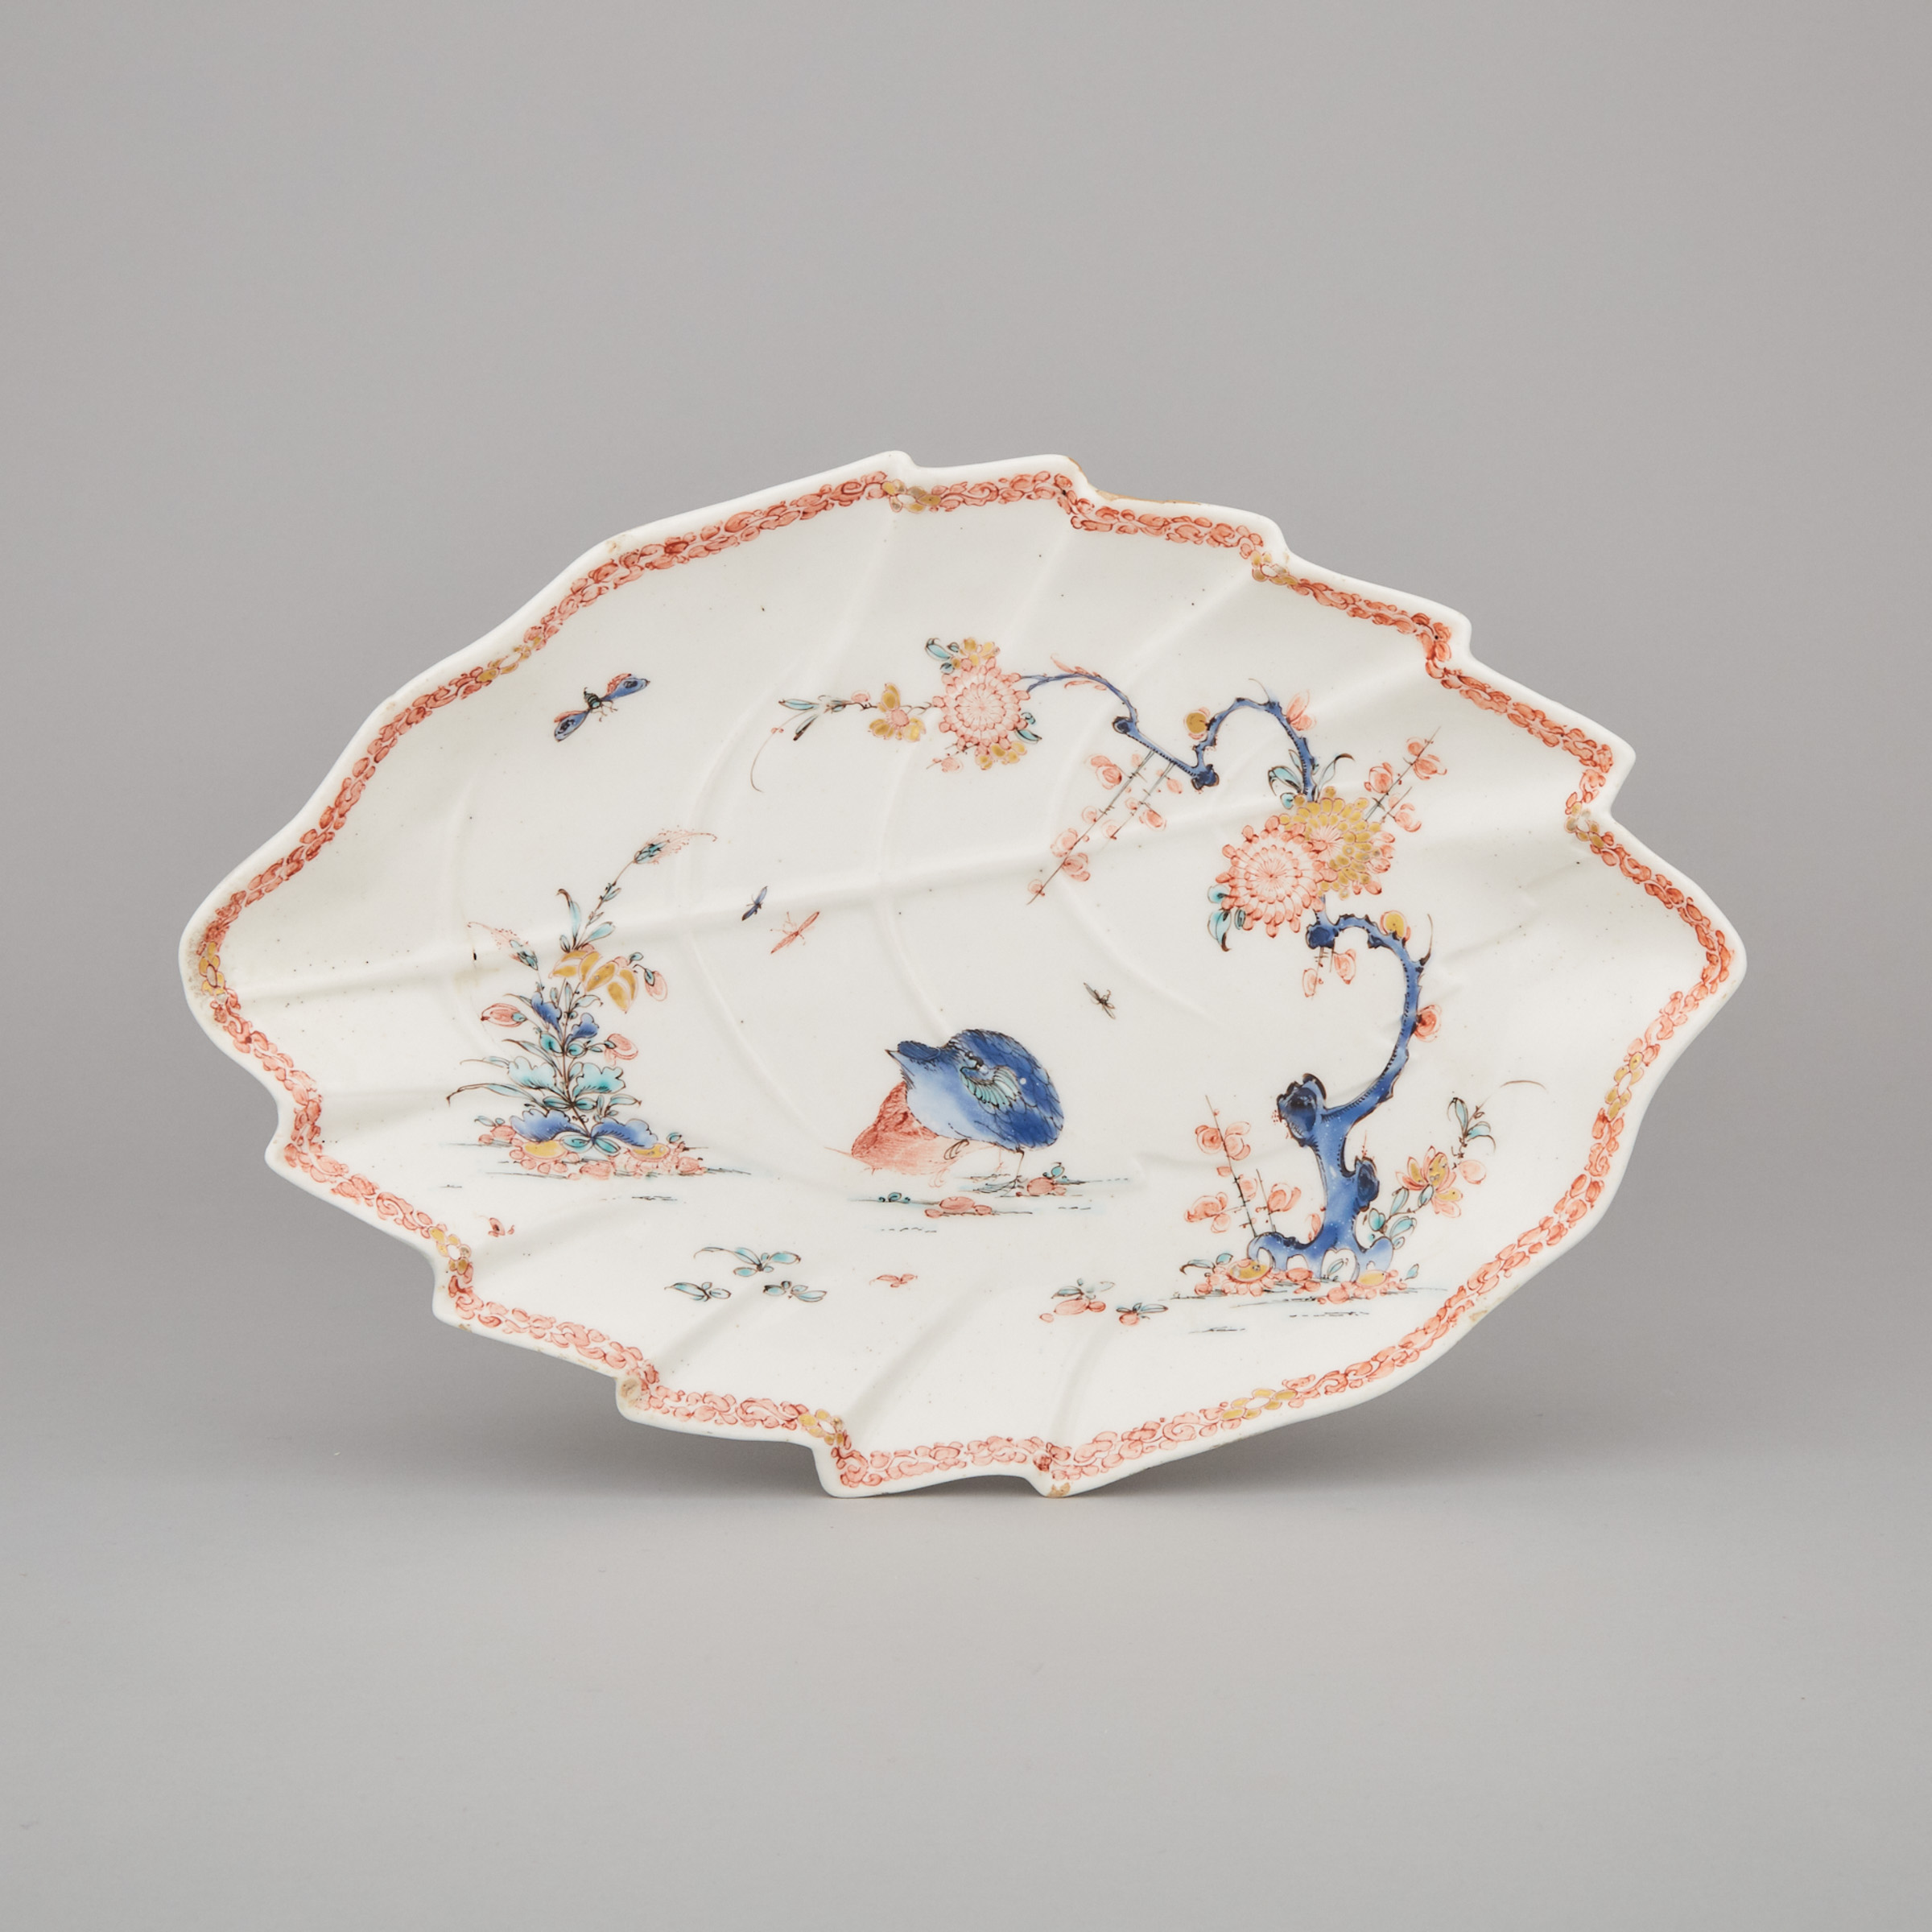 Bow Kakiemon 'Two Quail' Pattern Leaf Dish, c.1760